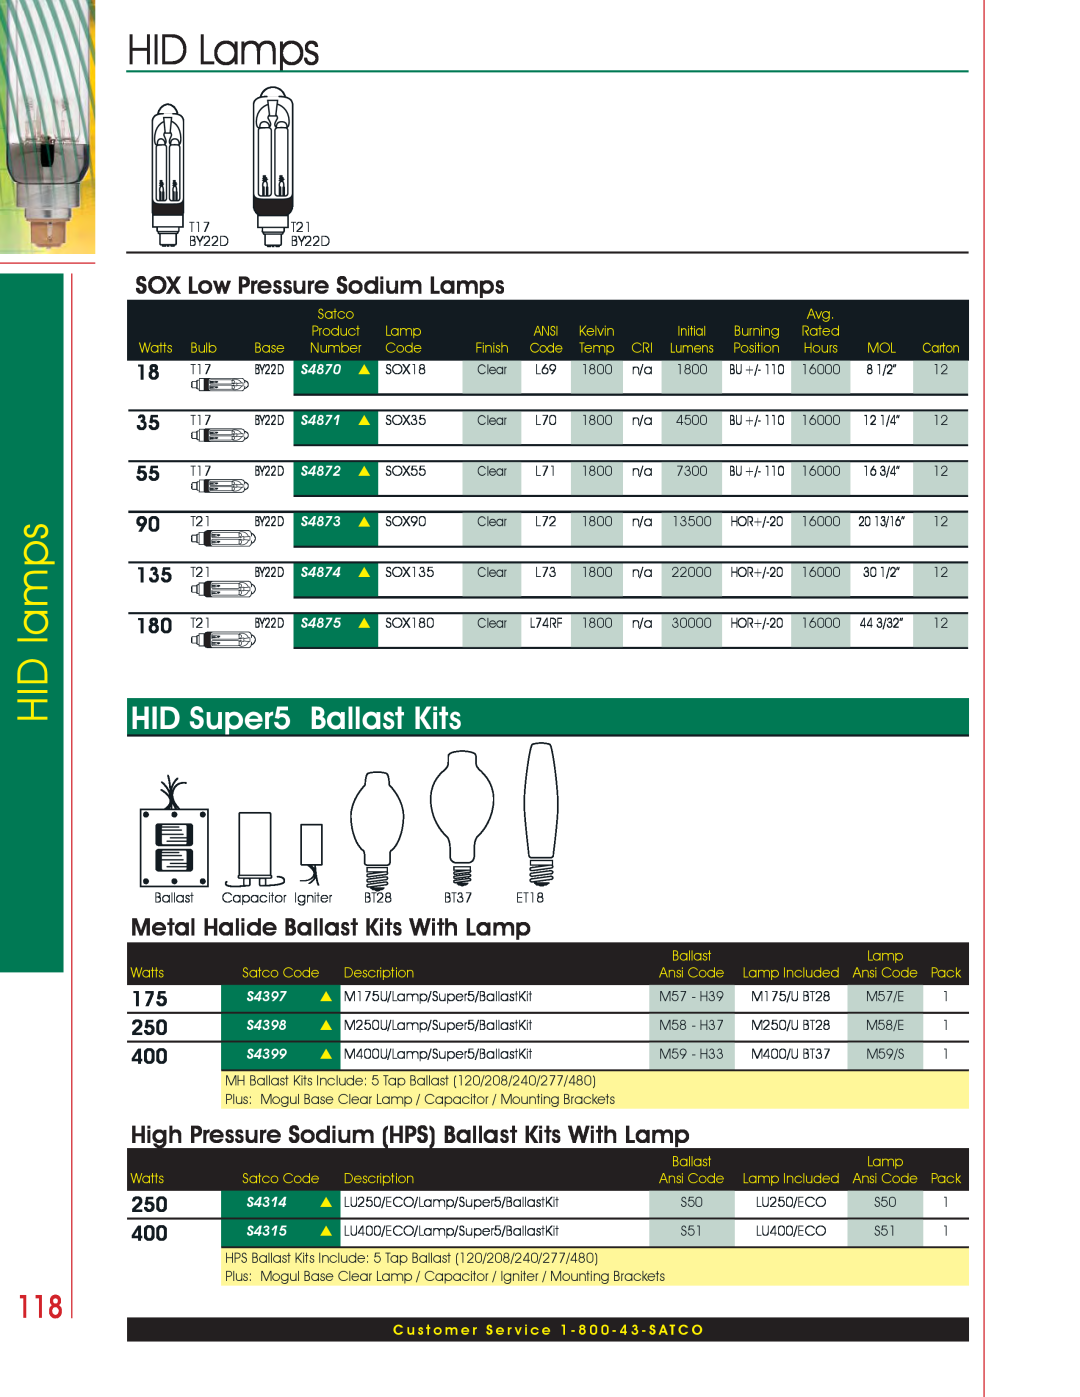 Satco Products HID Lamps manual SOX Low Pressure Sodium Lamps, Metal Halide Ballast Kits With Lamp, HID lamps 